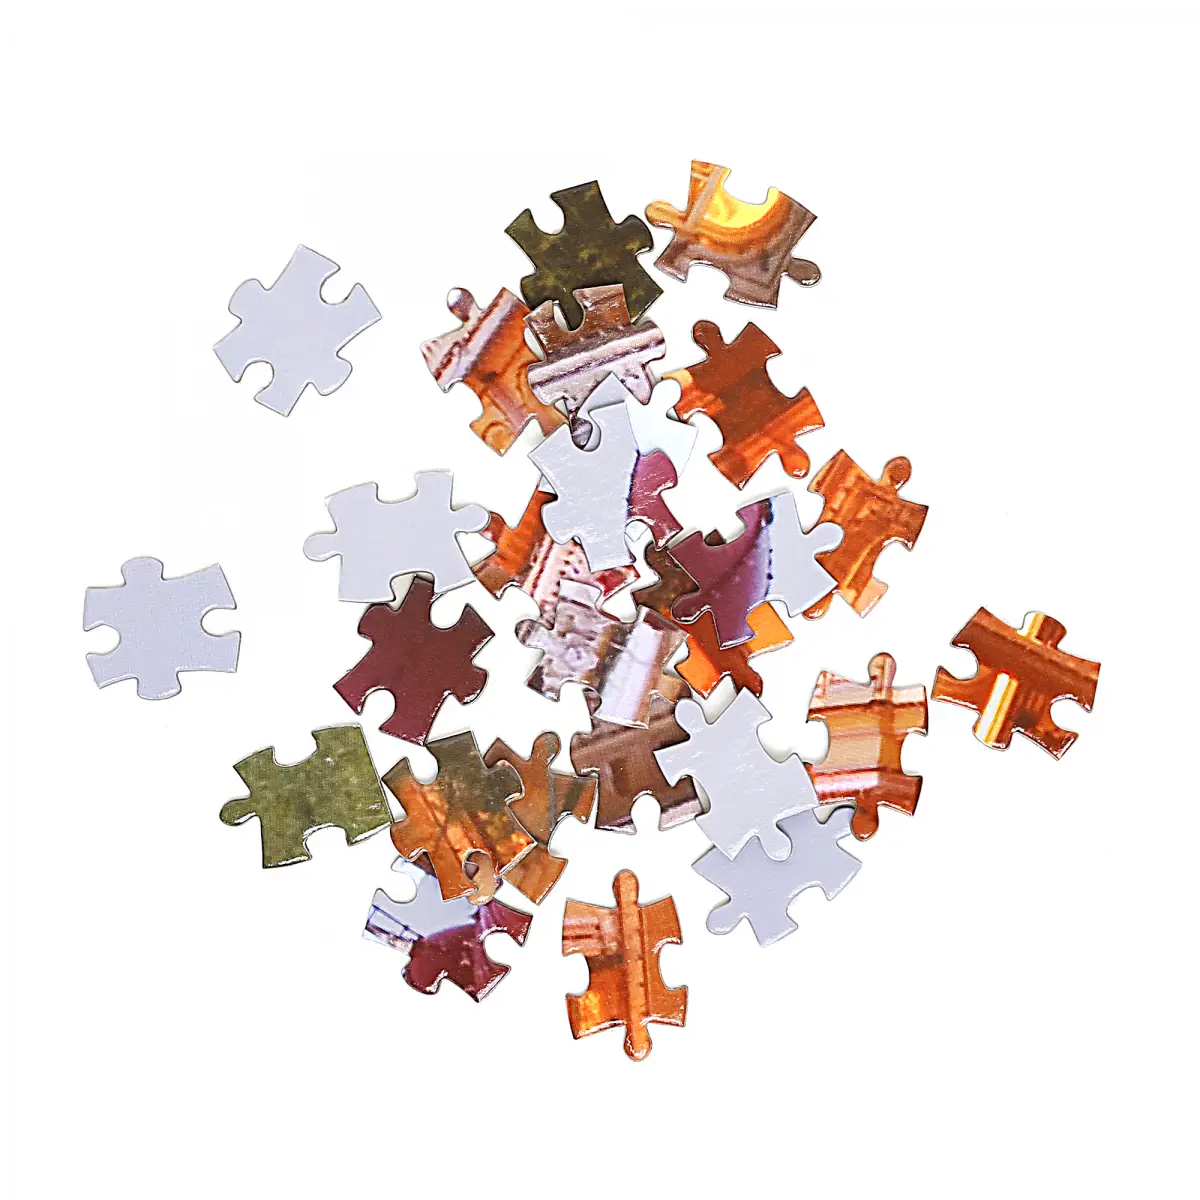 Funskool Mysore Puzzle, Puzzle for Kids, 1000PCs, 14Y+, Multicolour